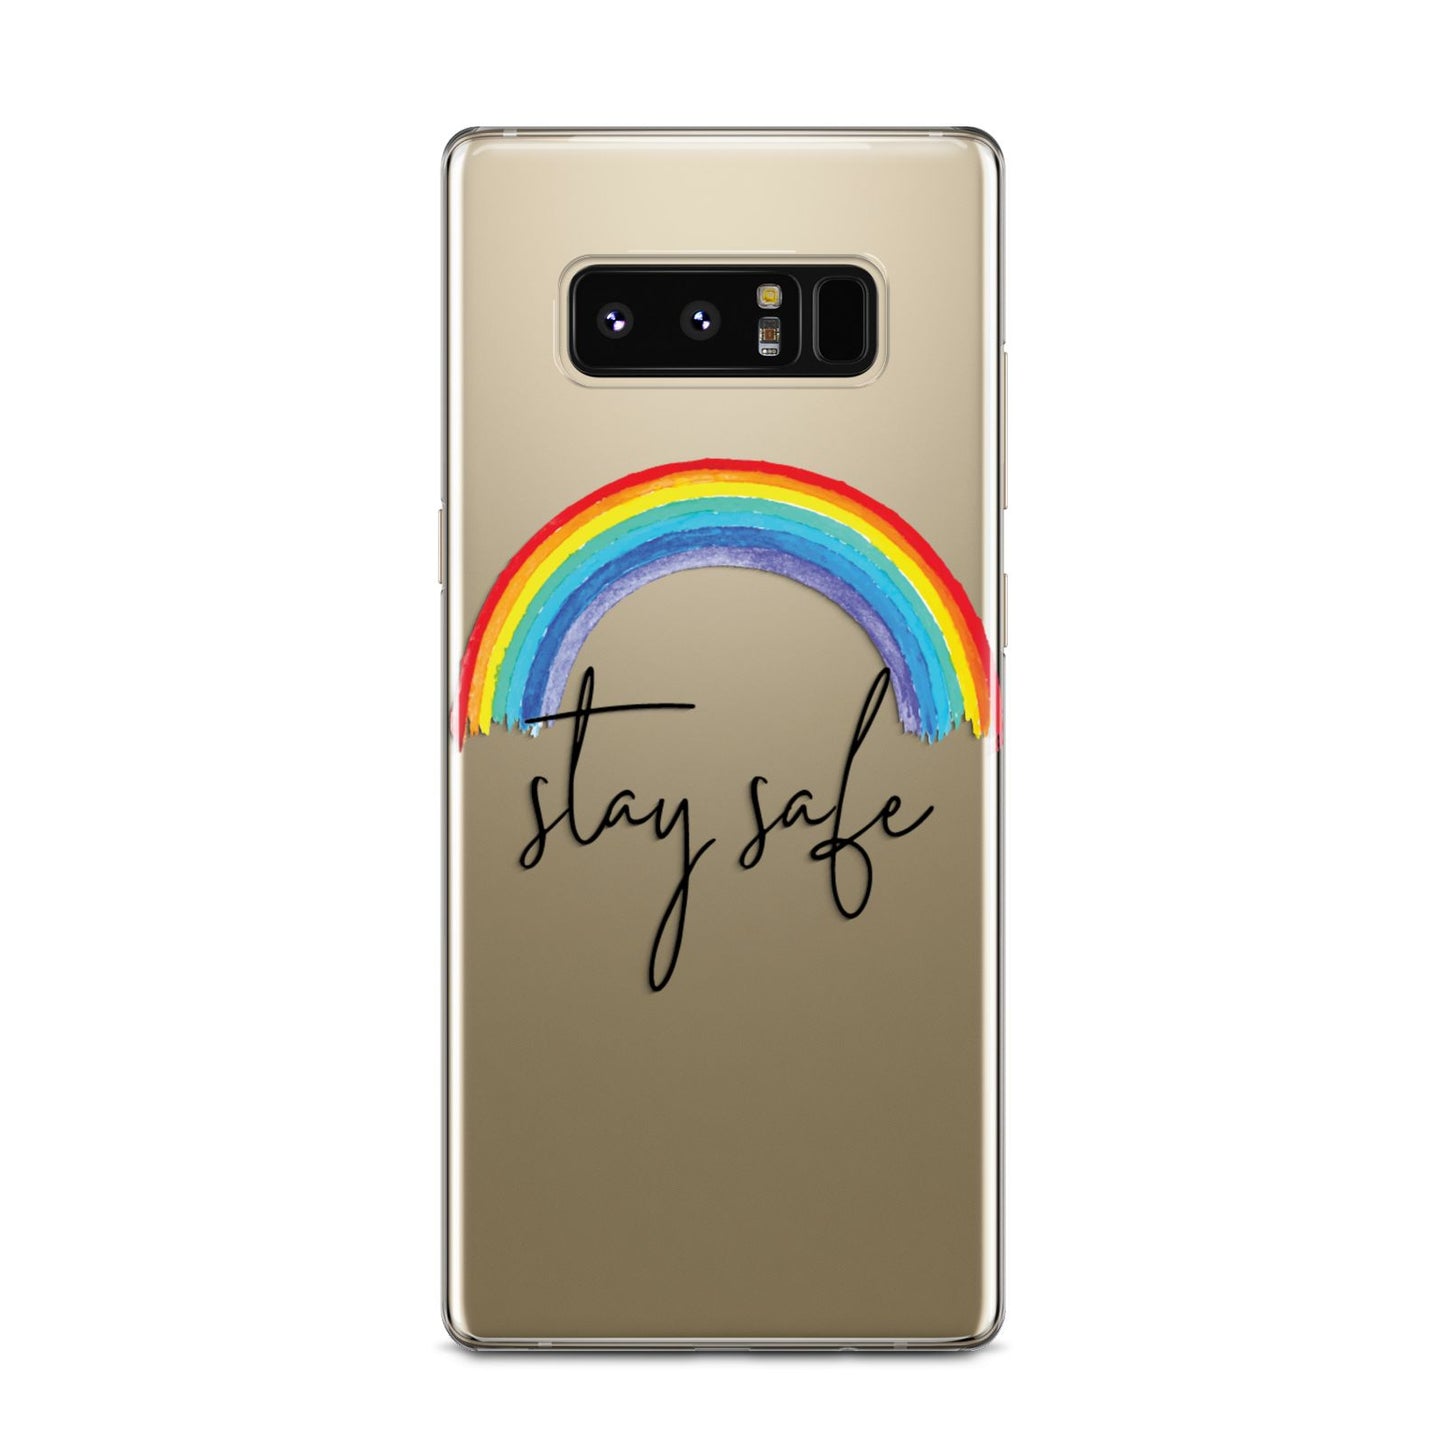 Stay Safe Rainbow Samsung Galaxy Note 8 Case